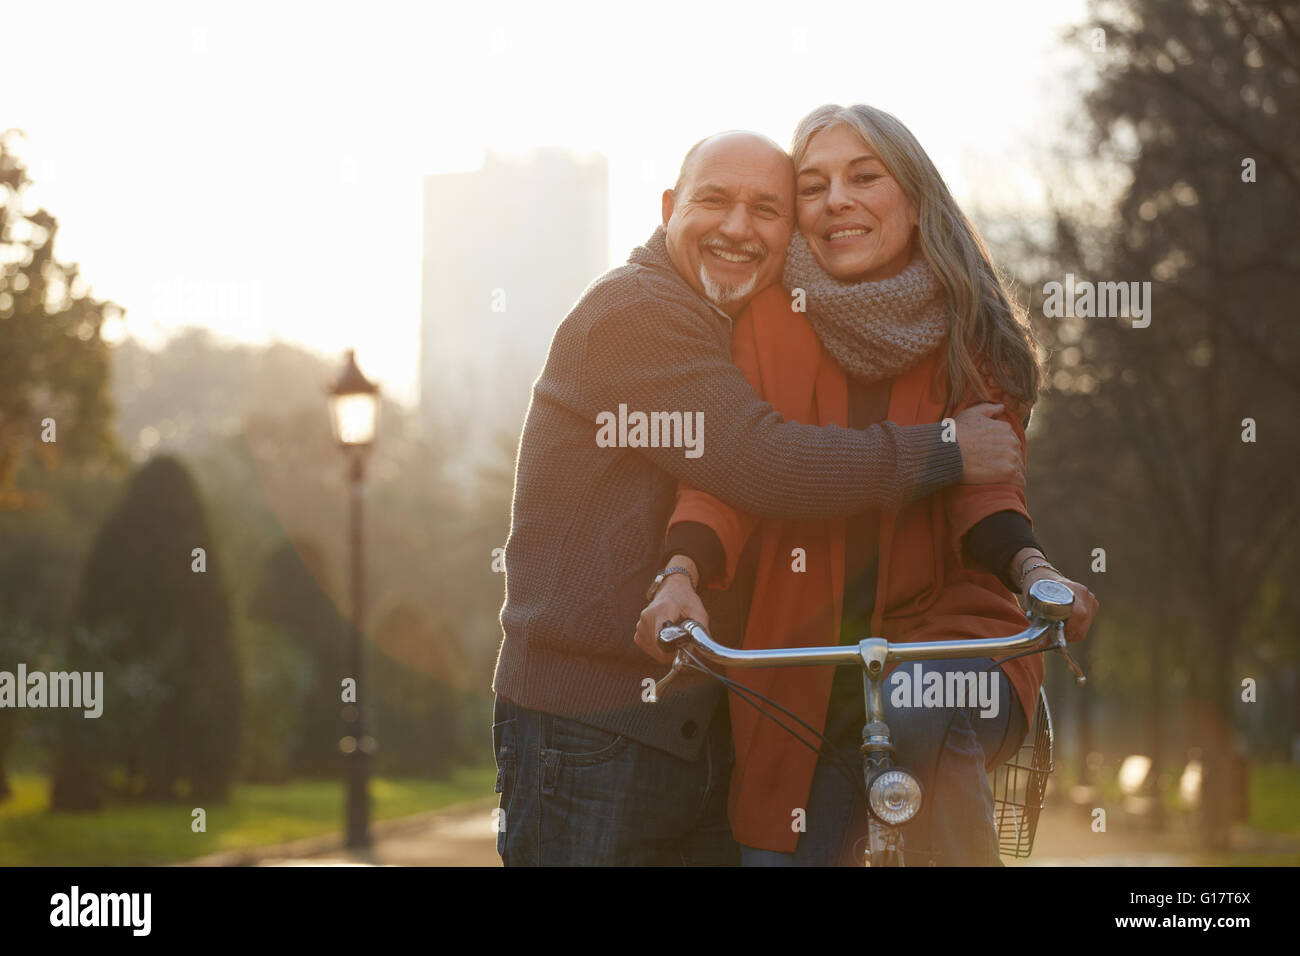 Man hugging woman smiling at camera location Banque D'Images